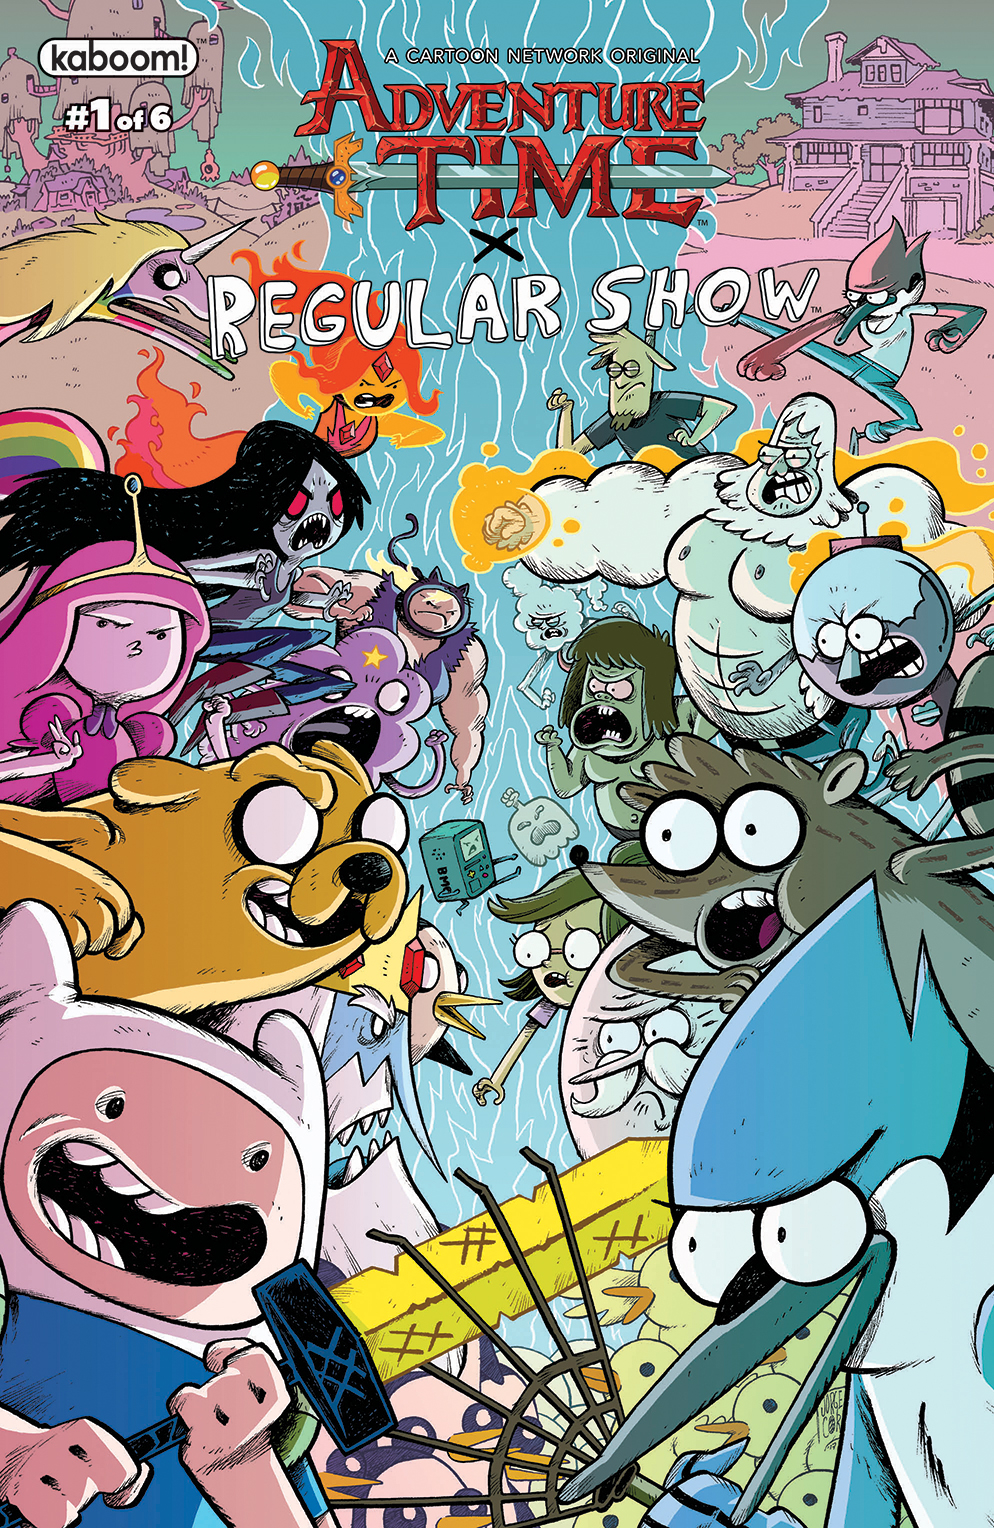 Adventure time regular show comic